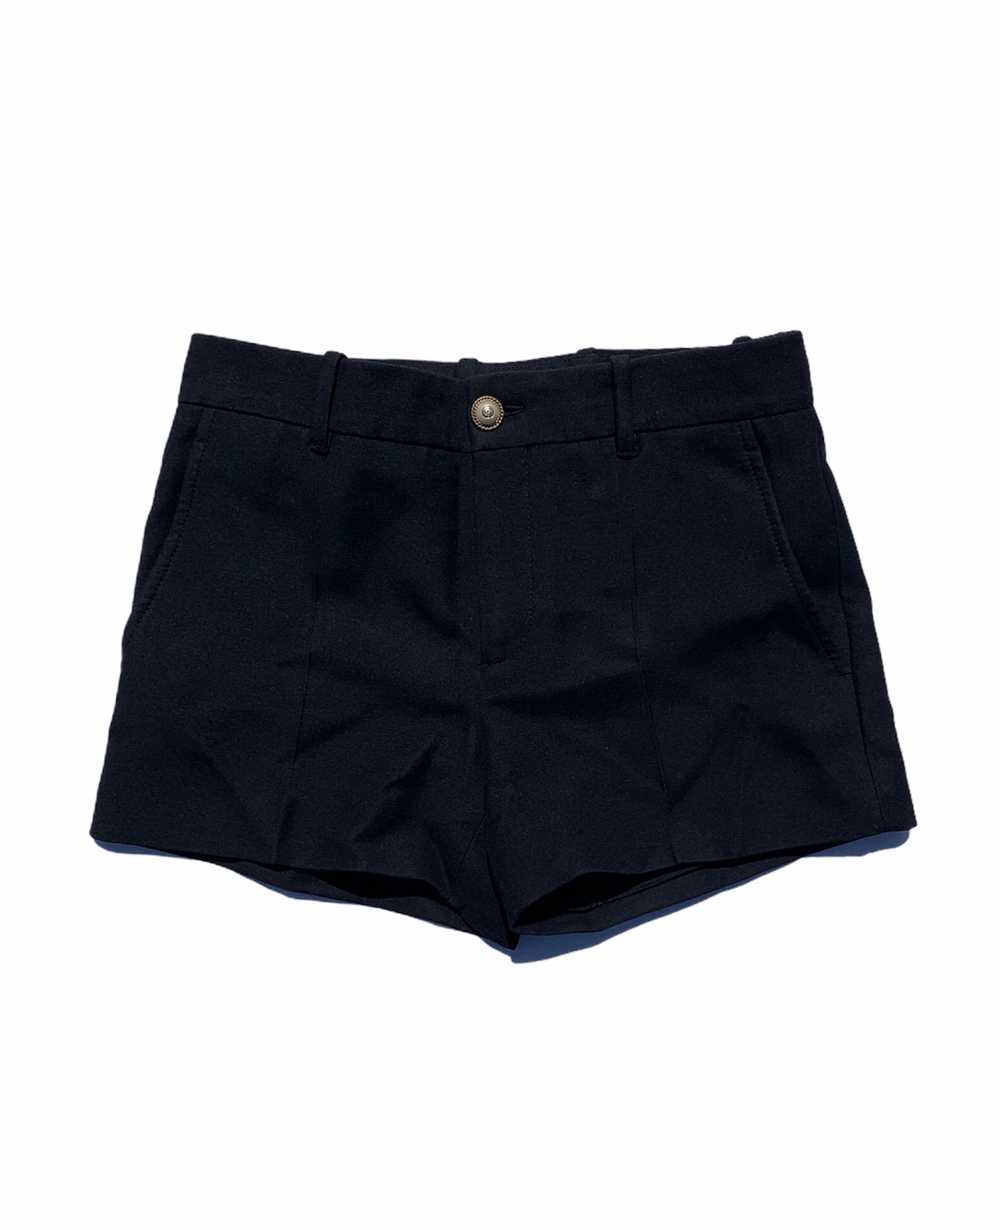 Gucci Black Silk-Wool Tailored Shorts - image 2